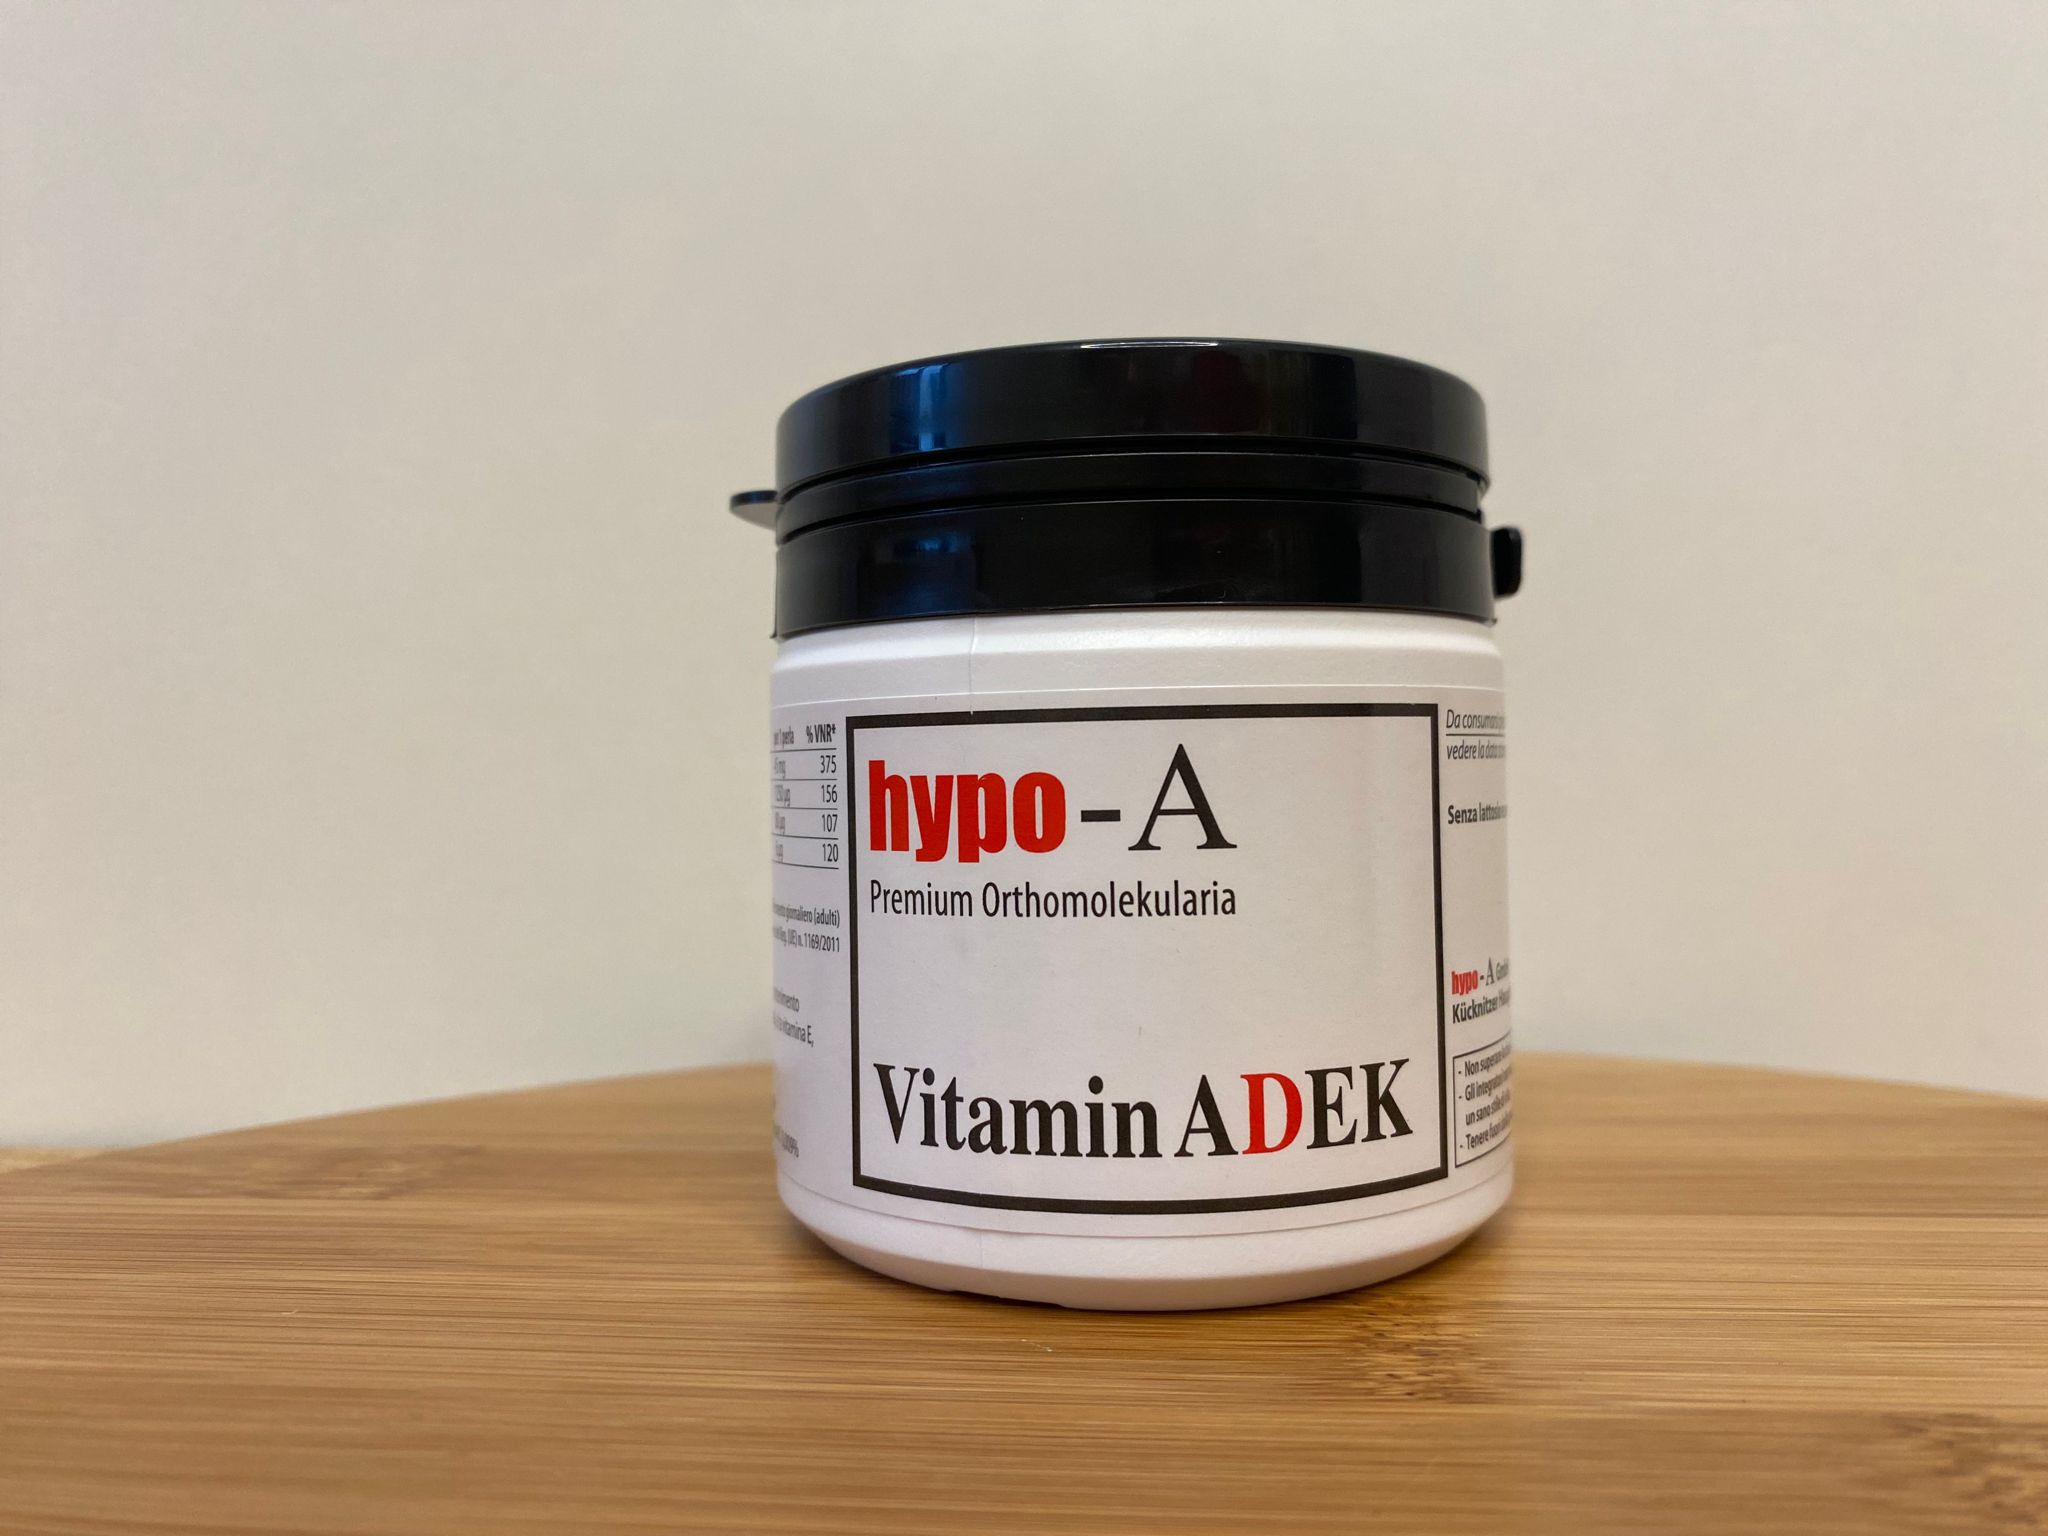 Hypo A: Vitamin ADEK